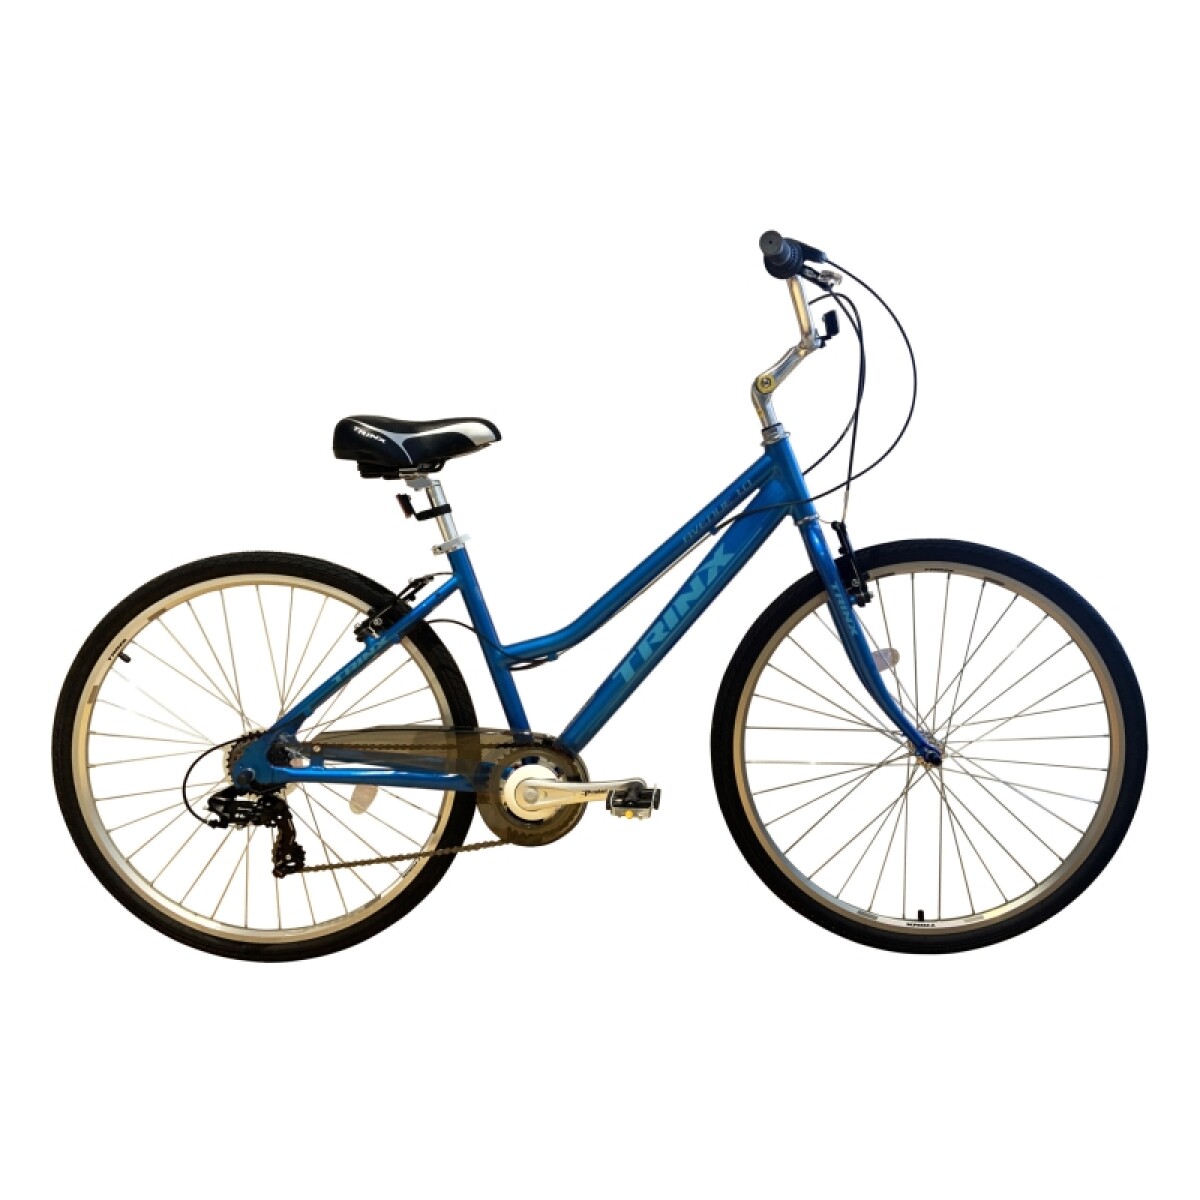 Bicicleta Trinx Urbana Unisex R.28 Avenue 1.0 - Azul 